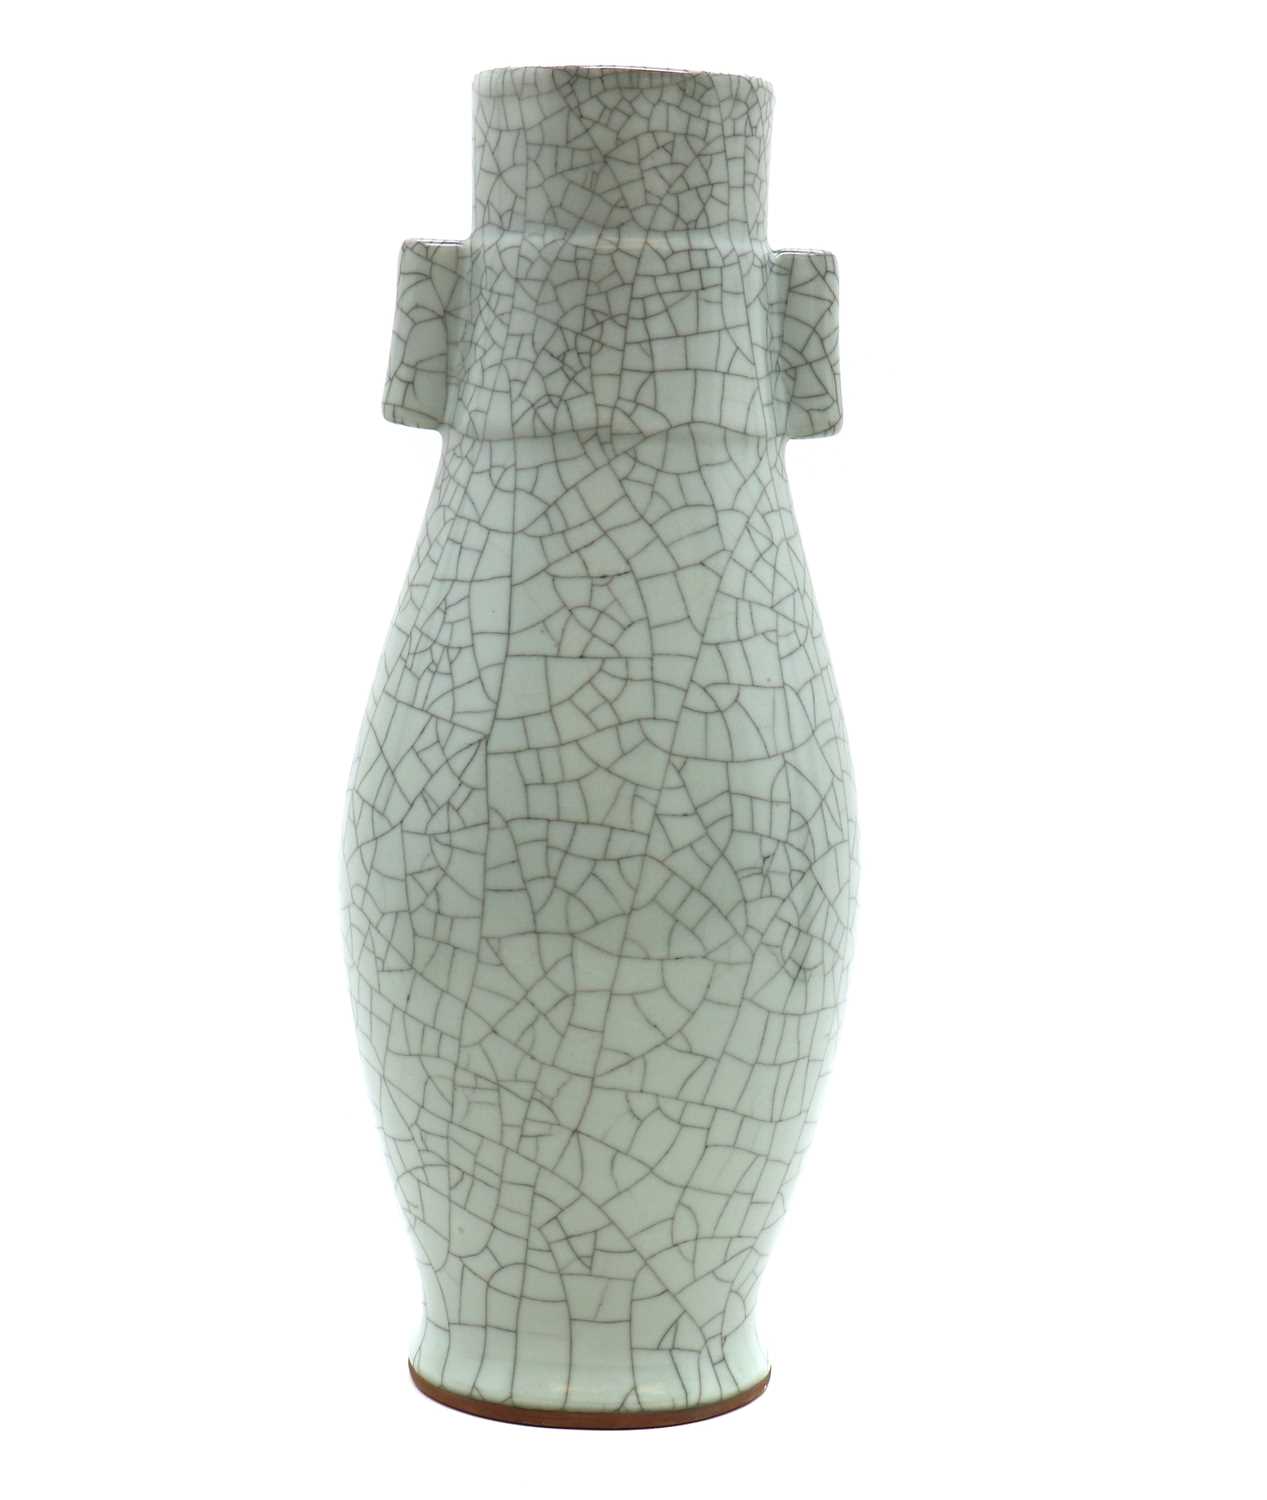 Lot 62 - A Chinese ge-type hu vase